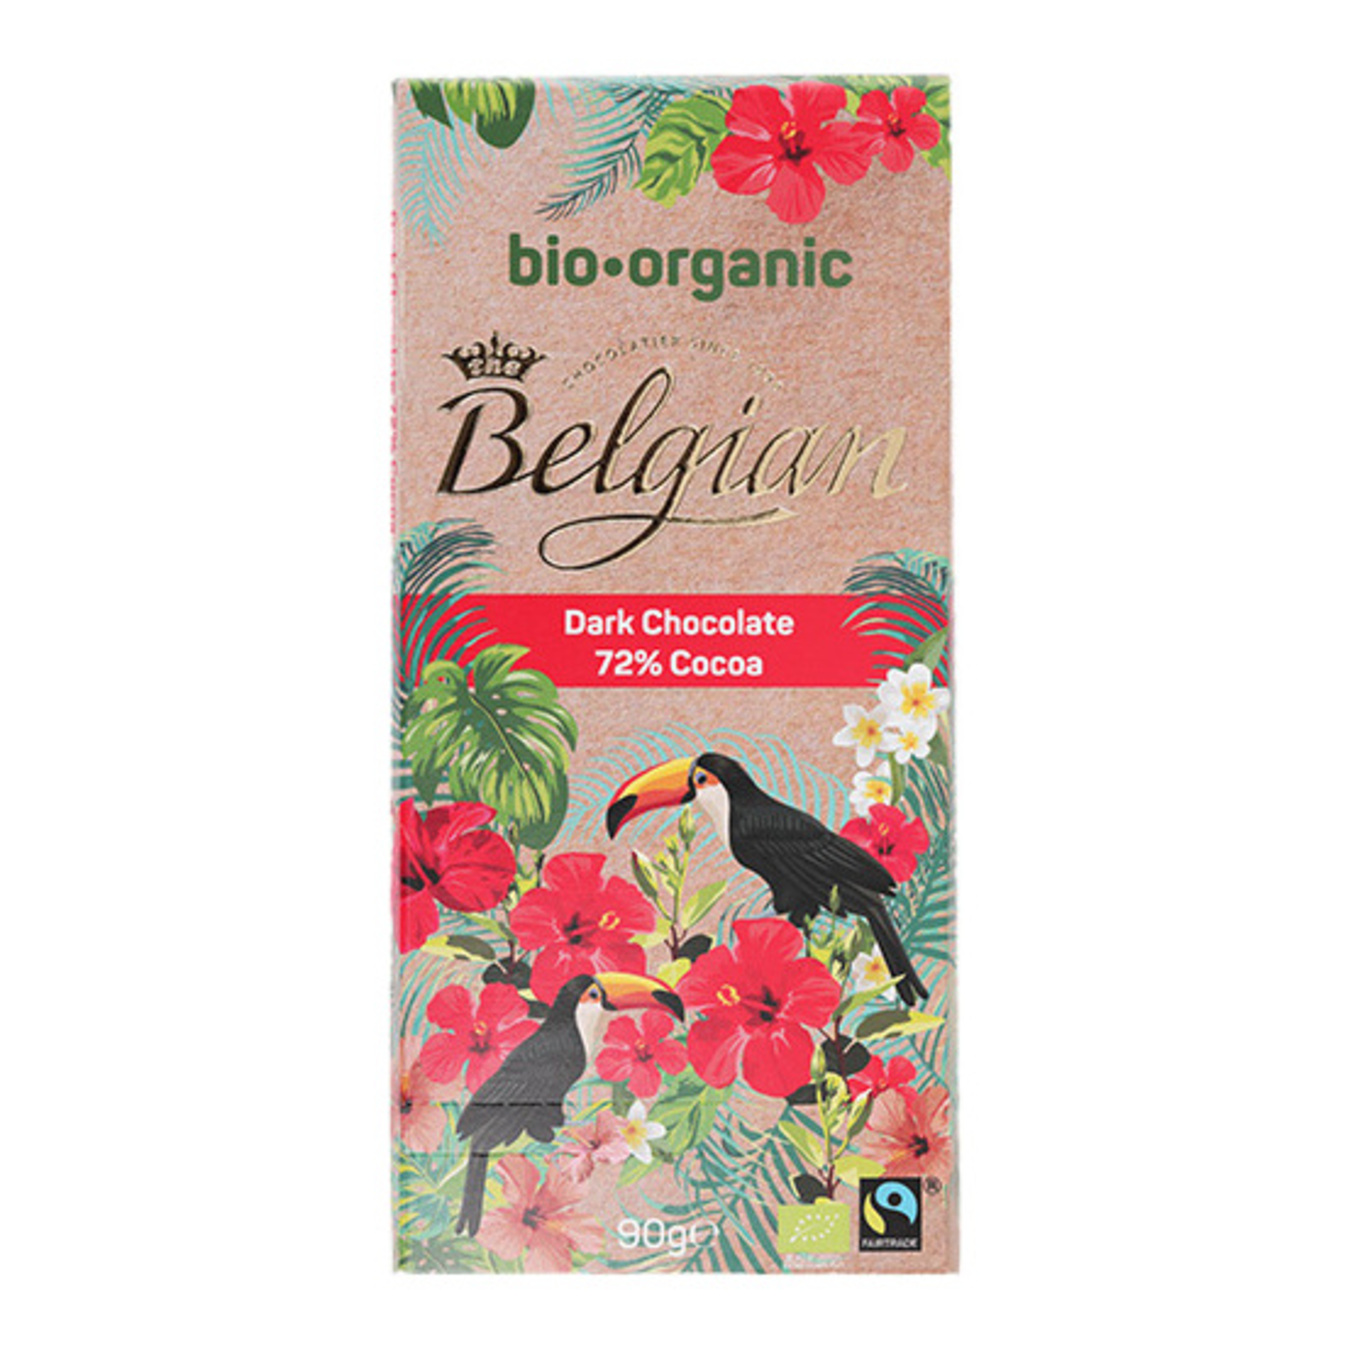 Black Chocolate Belgian Organic 72% 90g